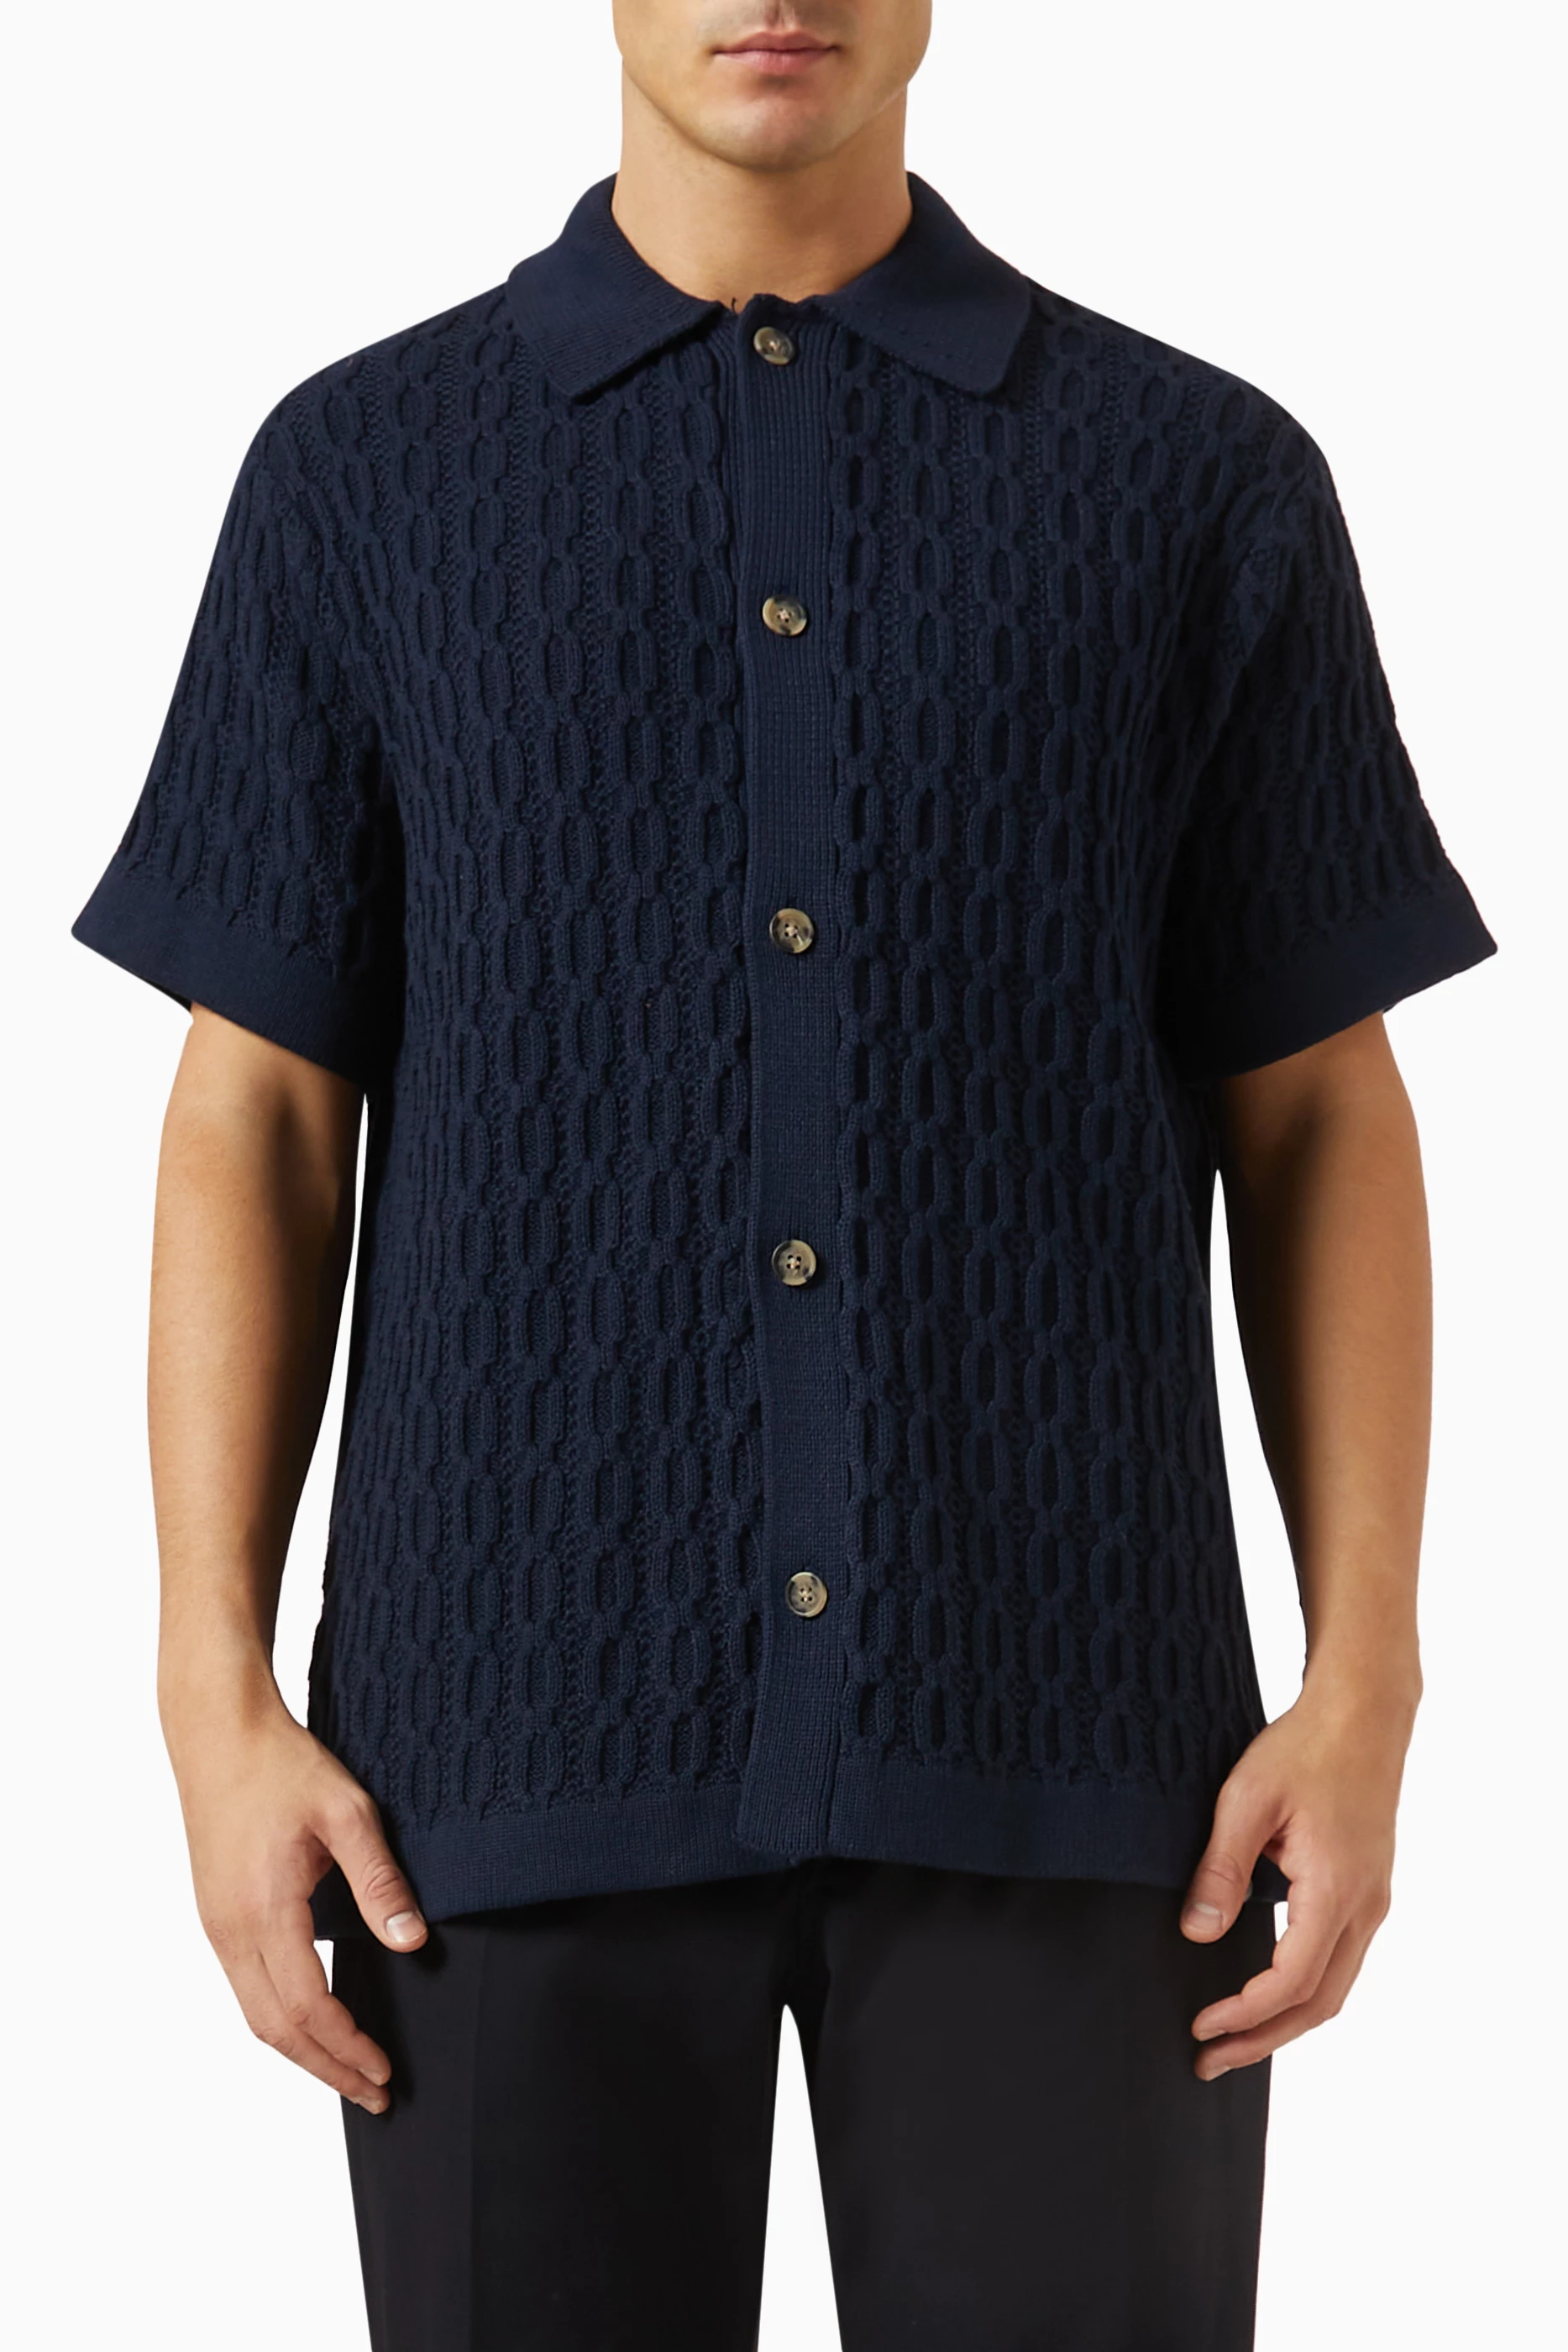 Buy Les Deux Blue Garrett Shirt in Cotton Knit Online for Men